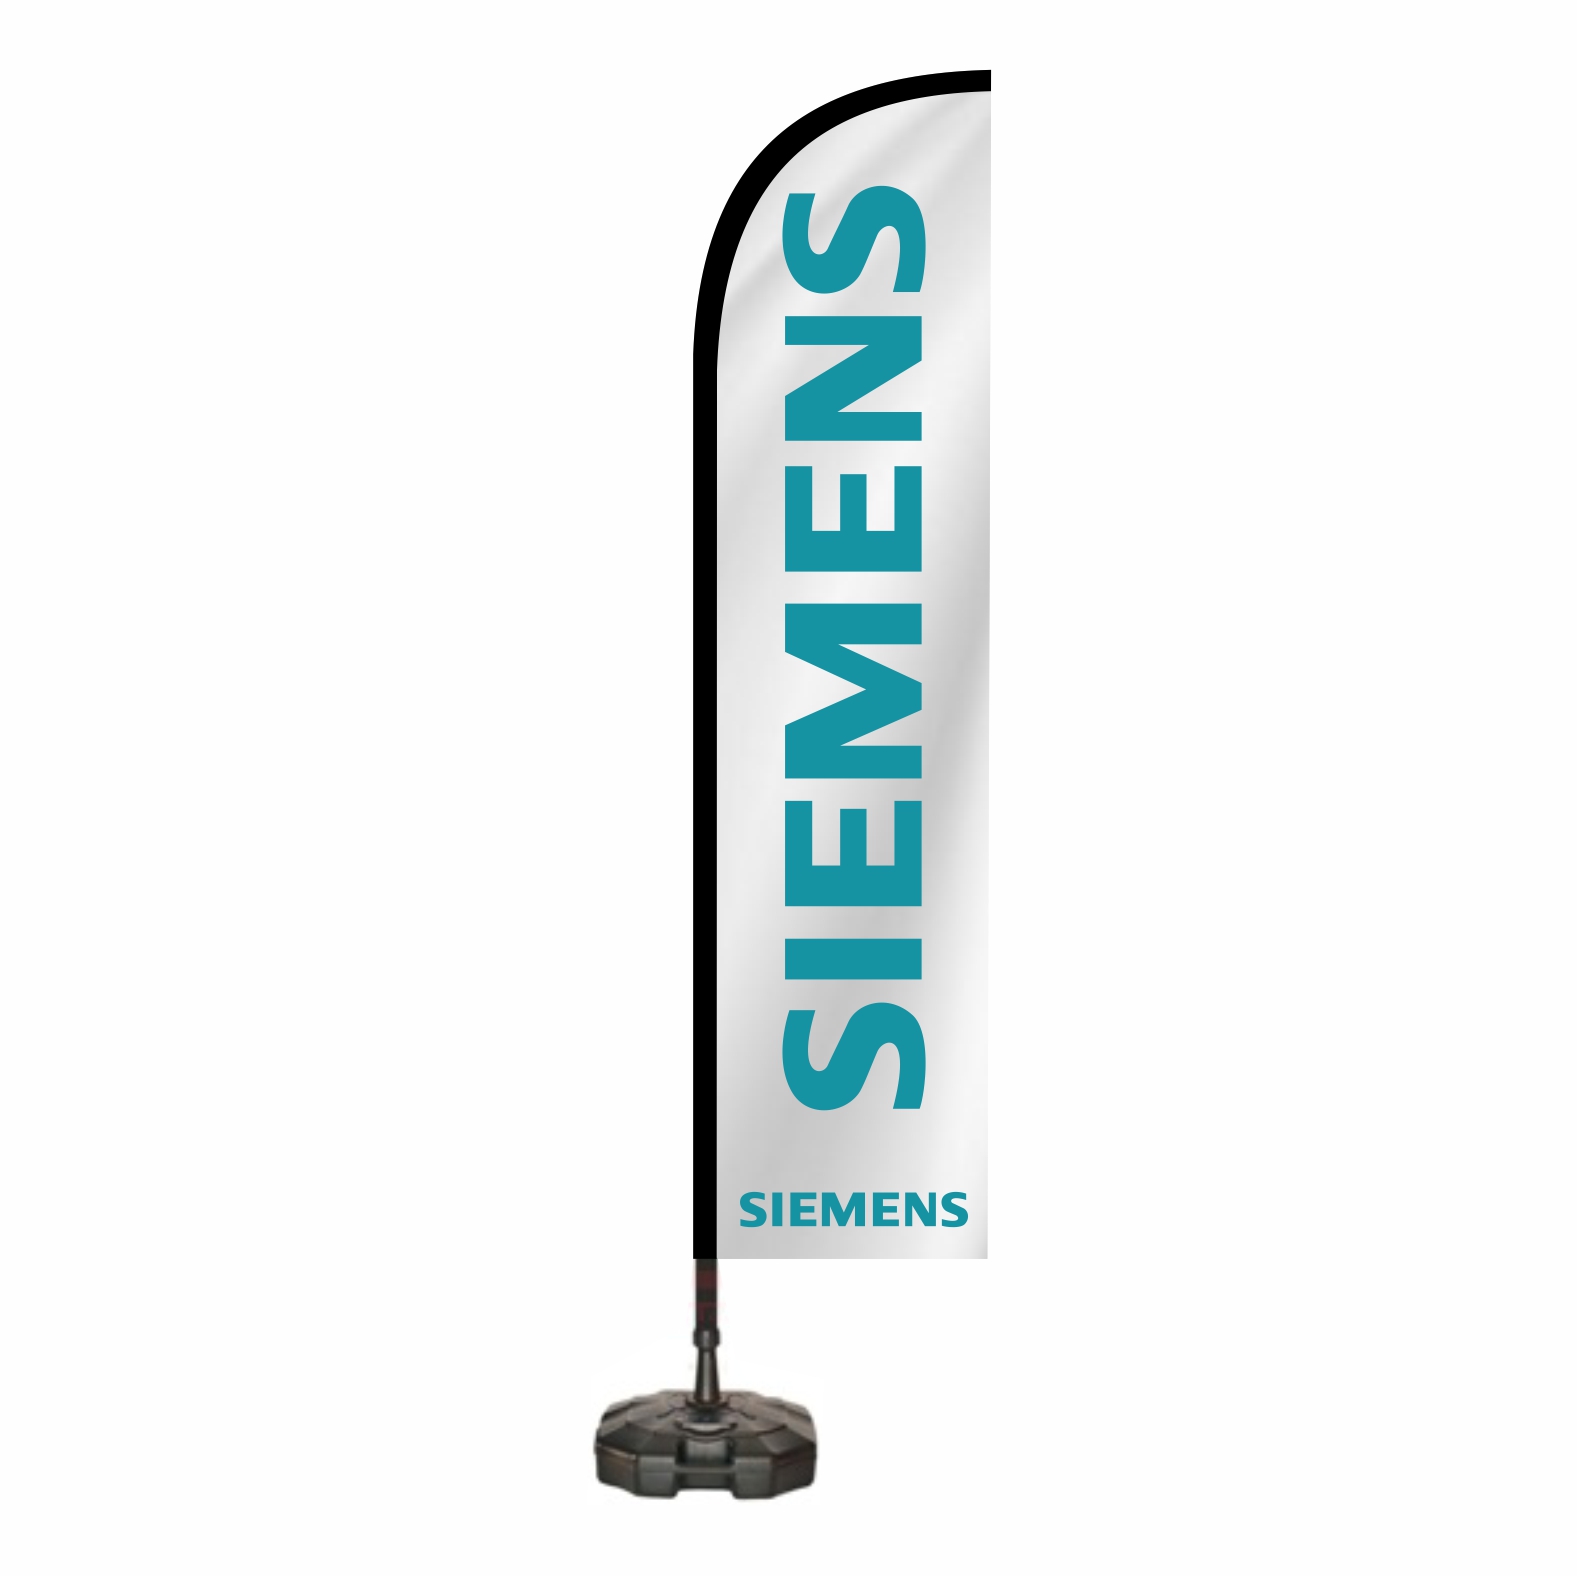 Siemens Oltal Bayra Nerede